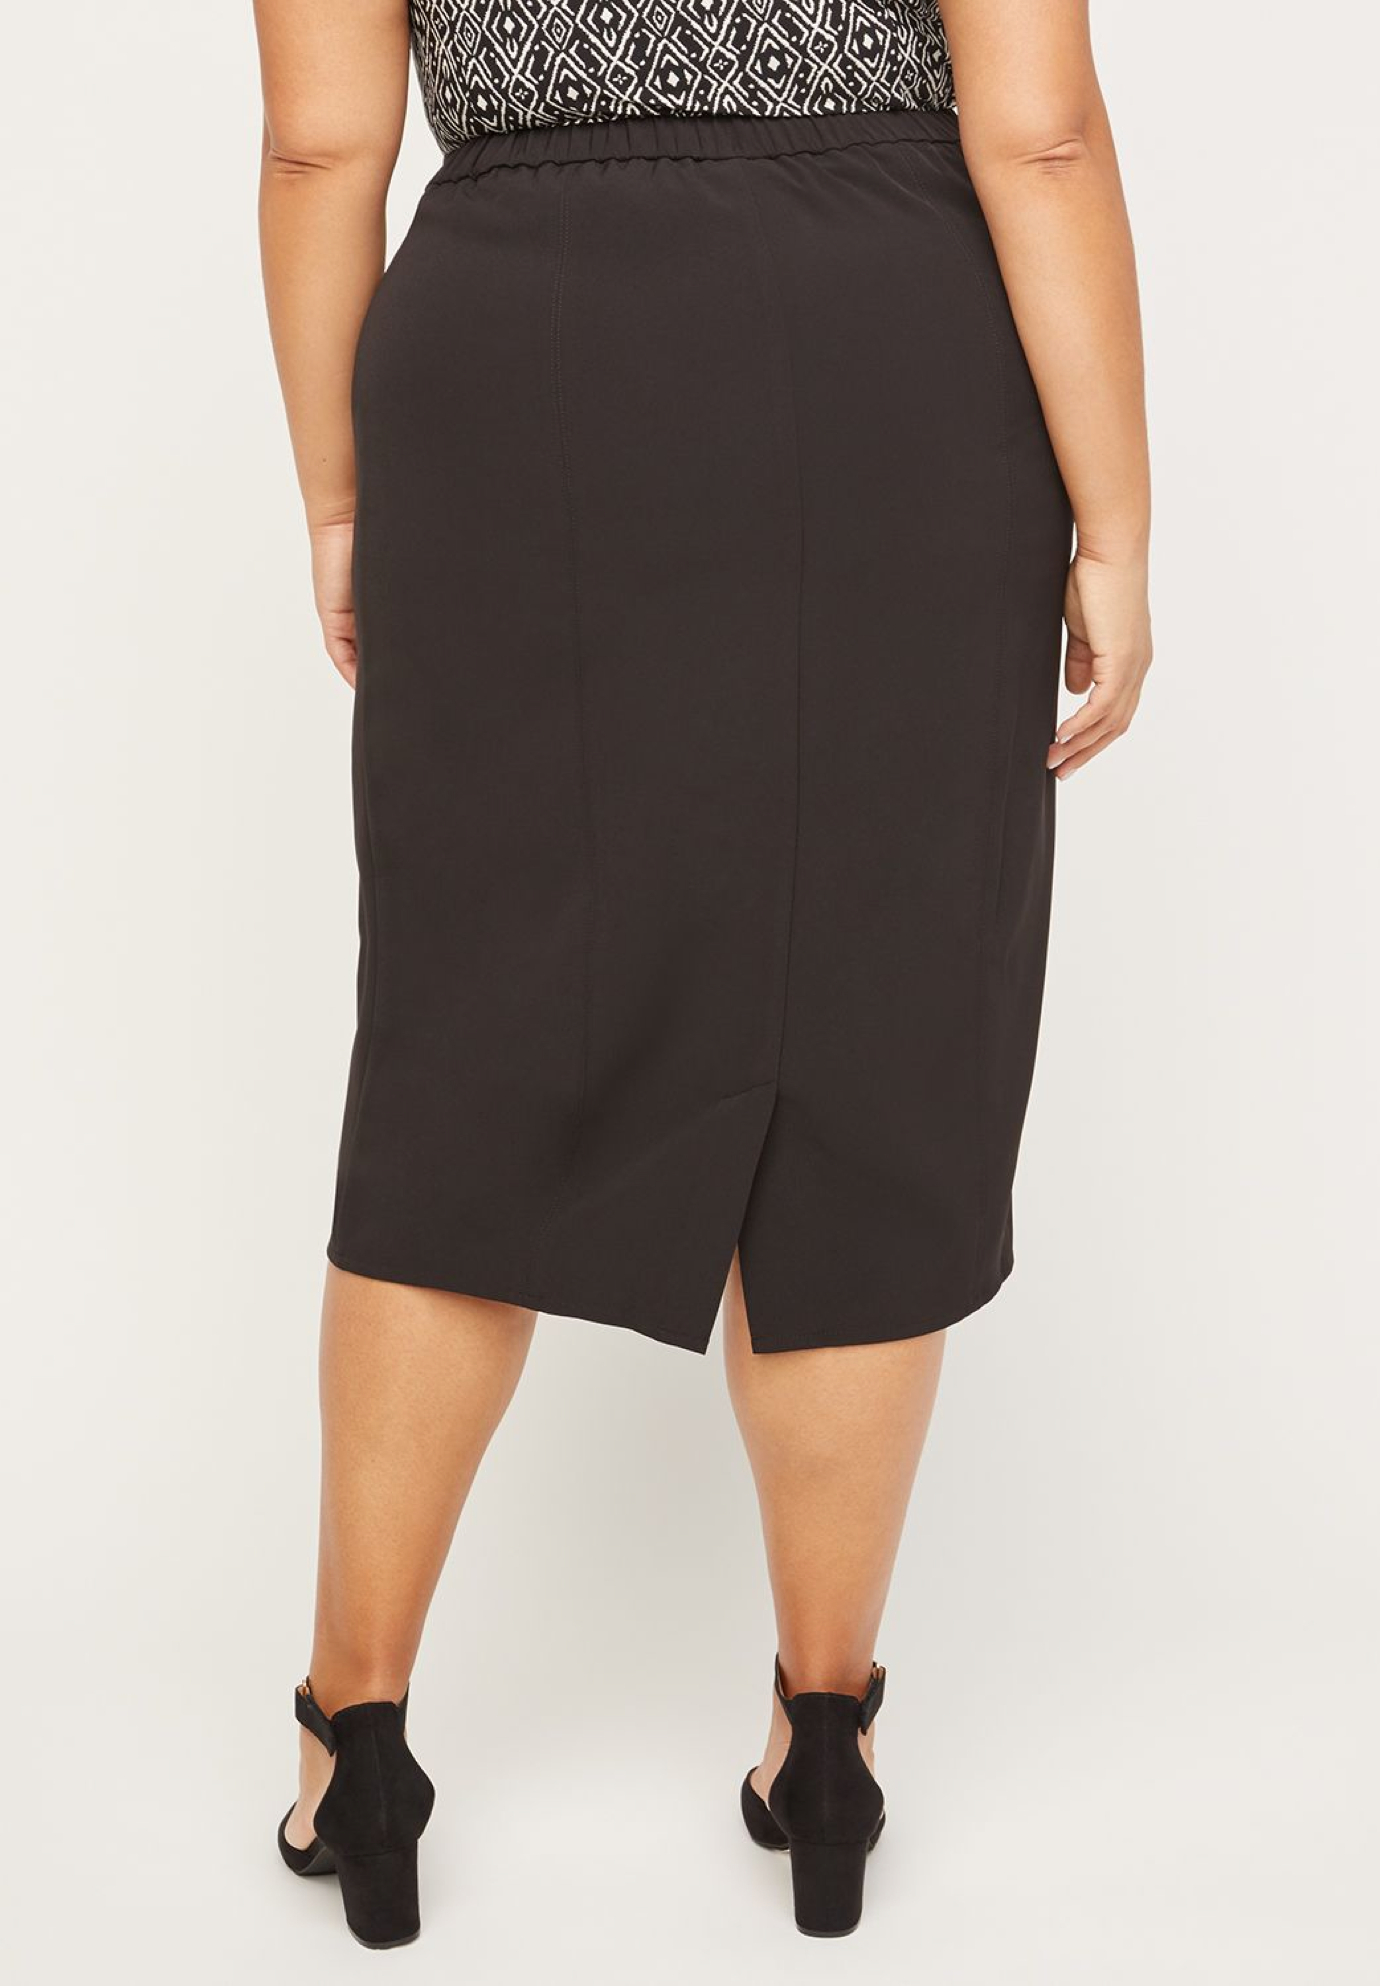 Black Label Pencil Skirt | Fullbeauty Outlet